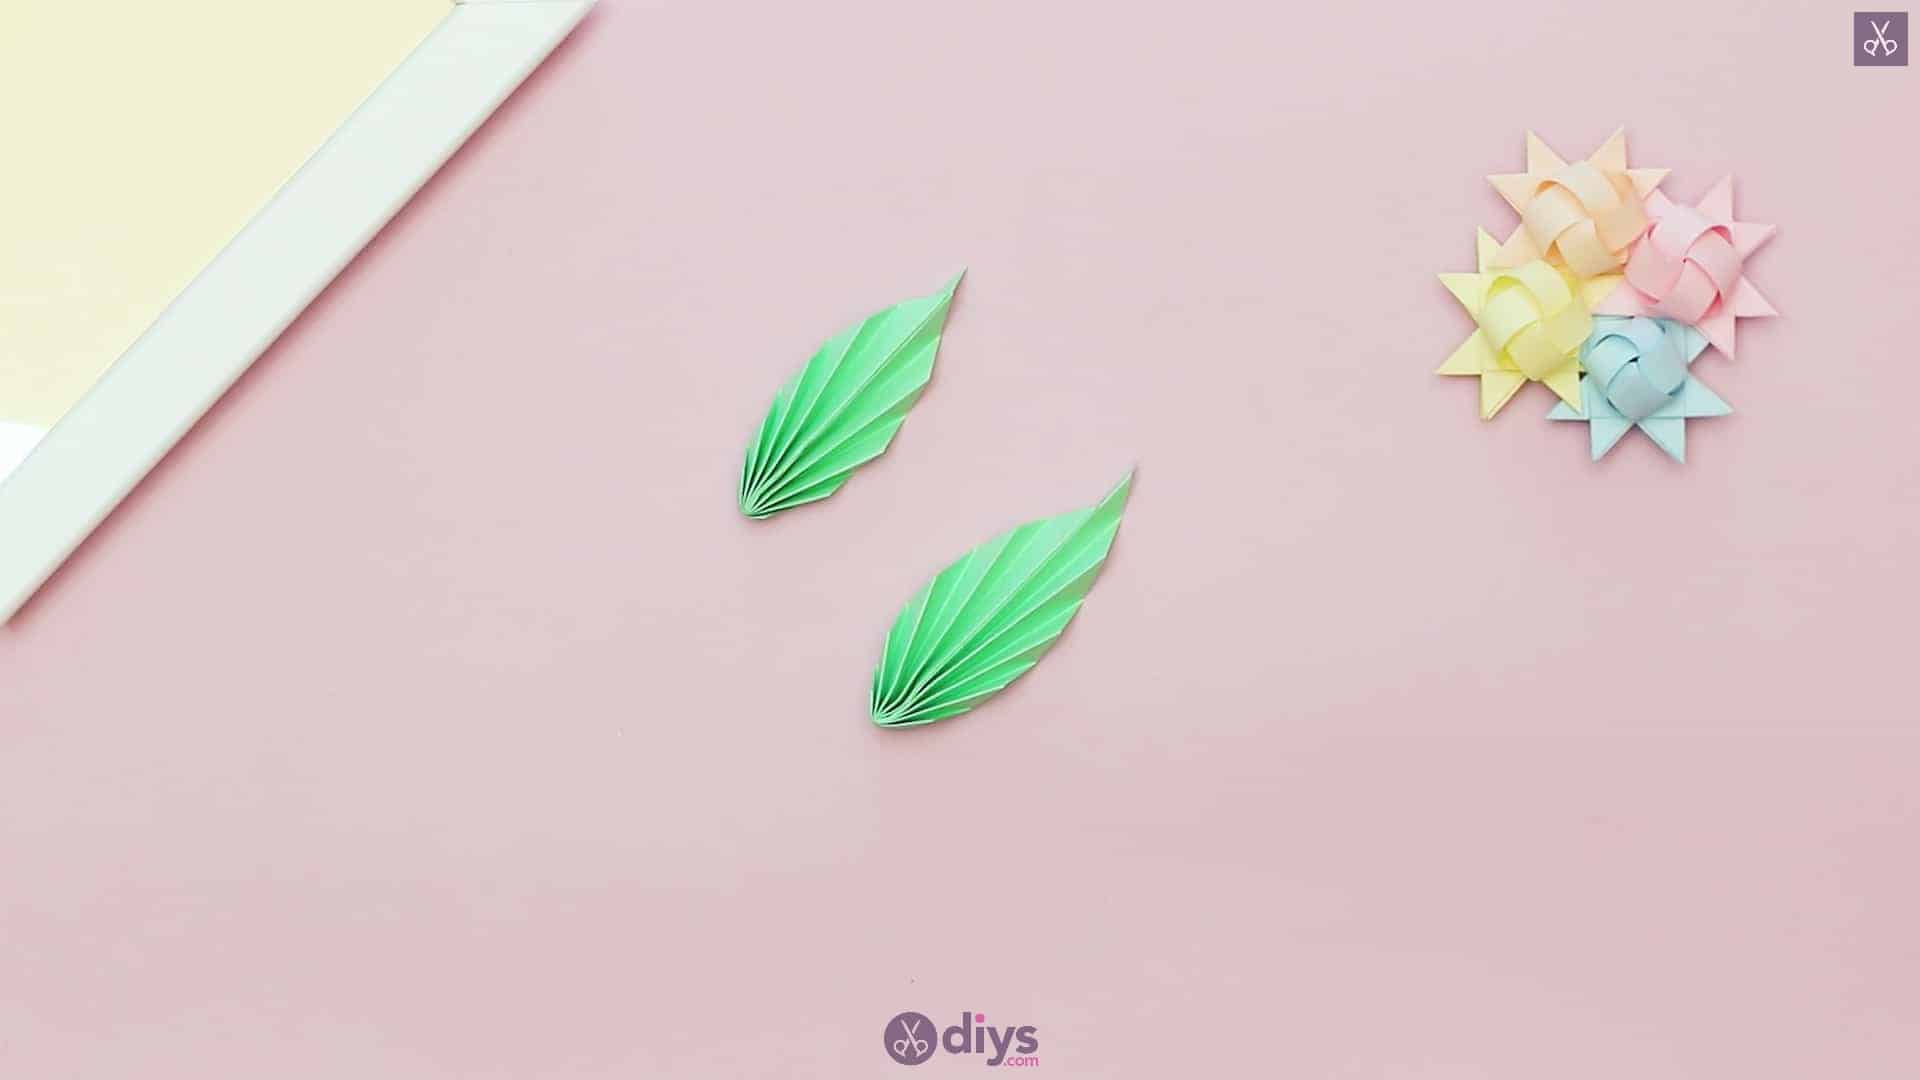 Diy origami flower art step 11f